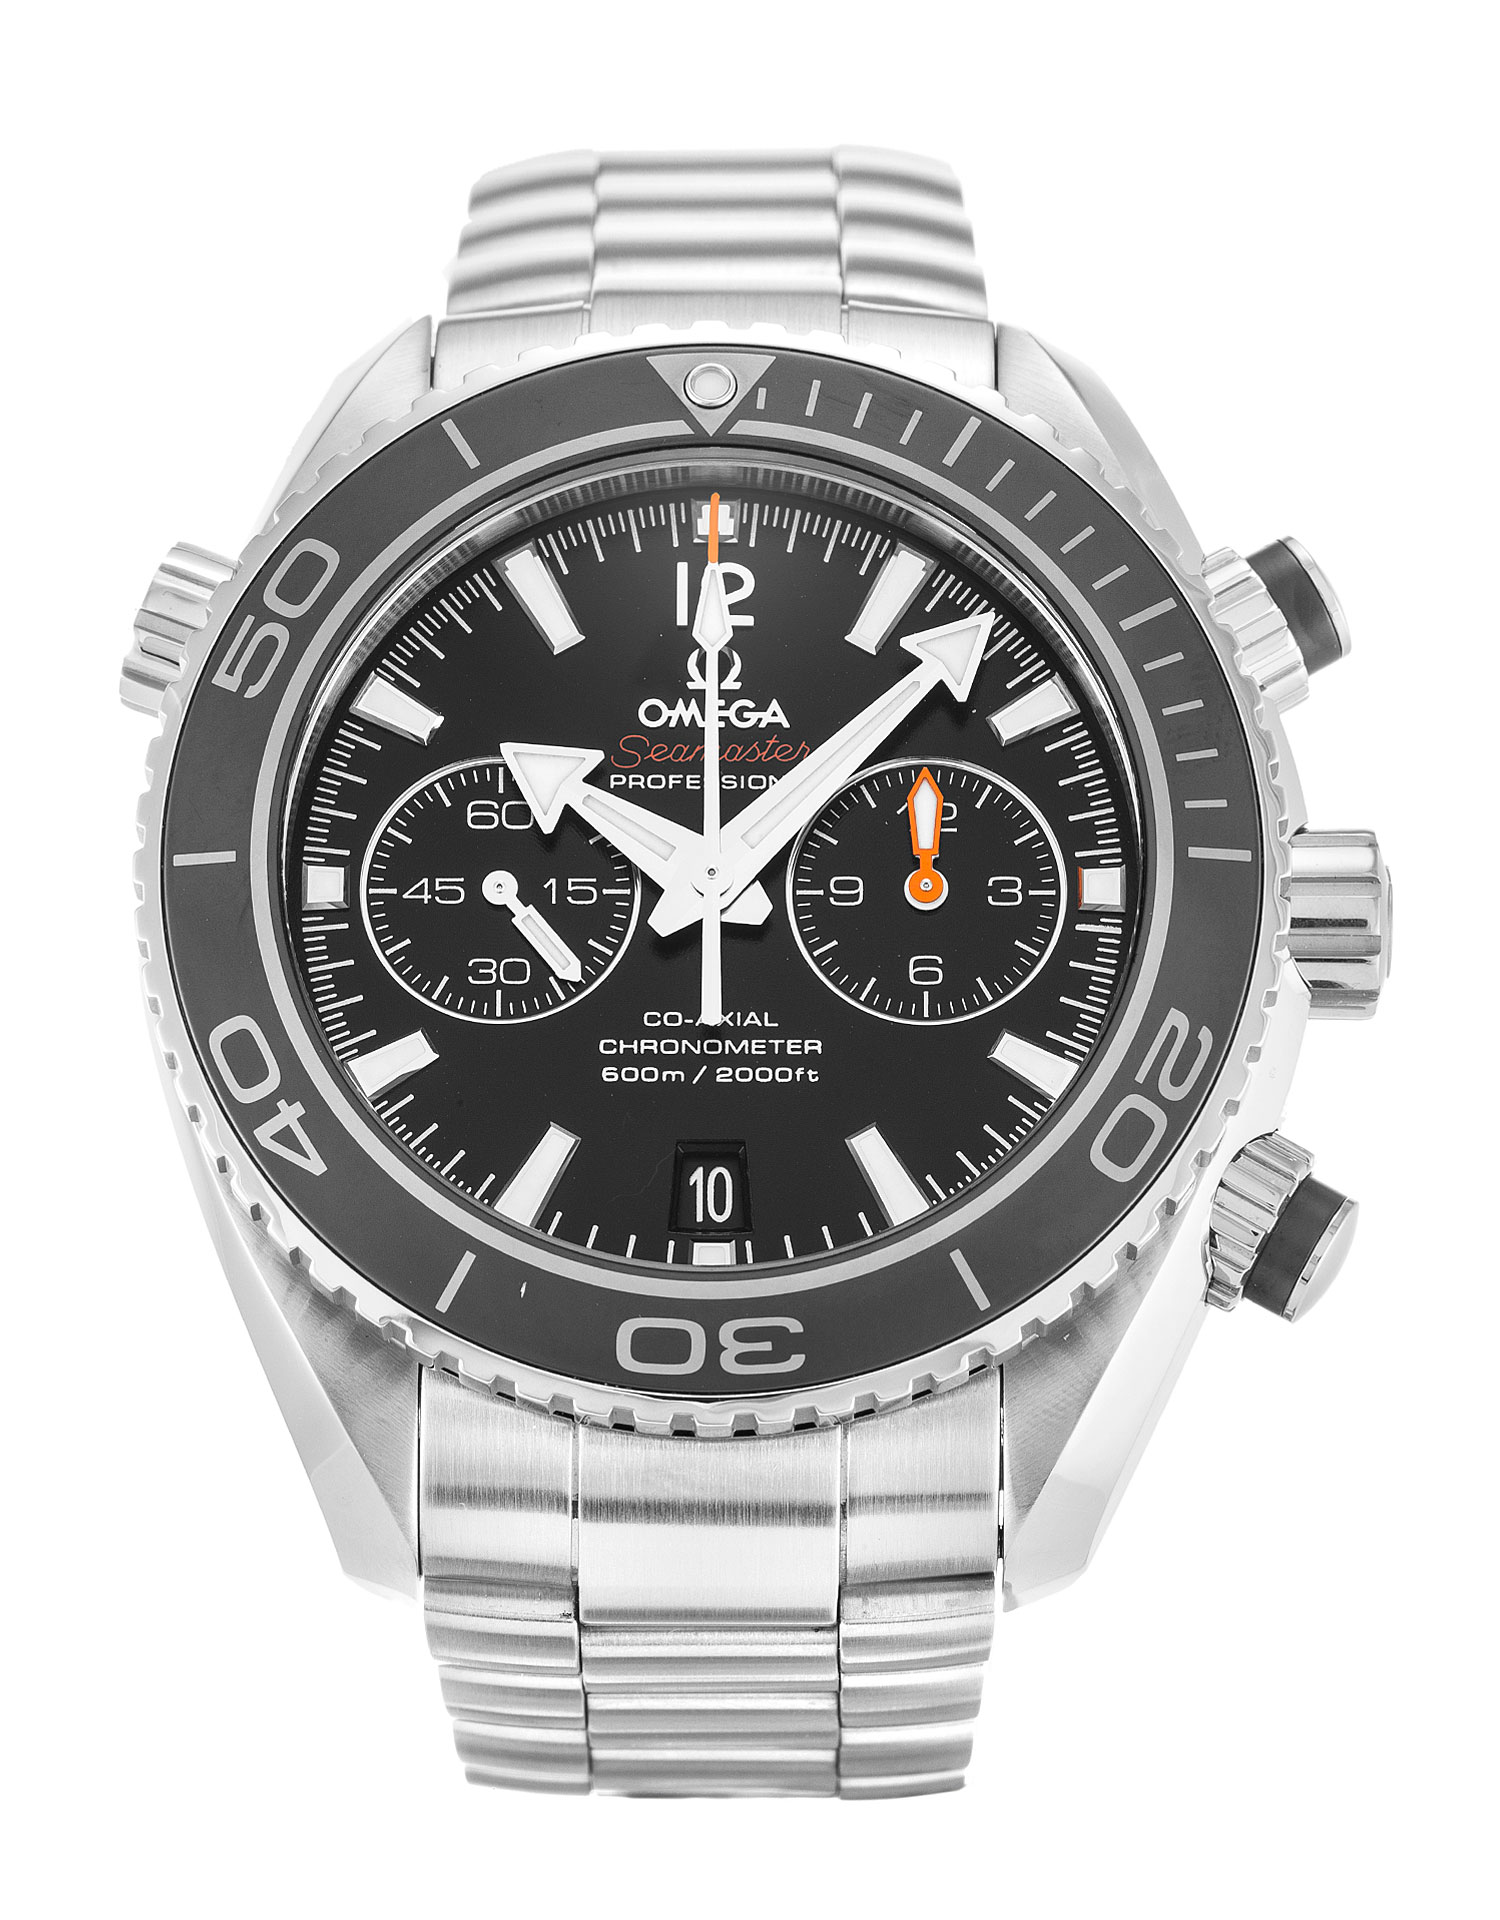 Excelente tienda para replicas relojes – Relojes de imitación 1:1- Rolex,  Omega, Breitling, Panerai